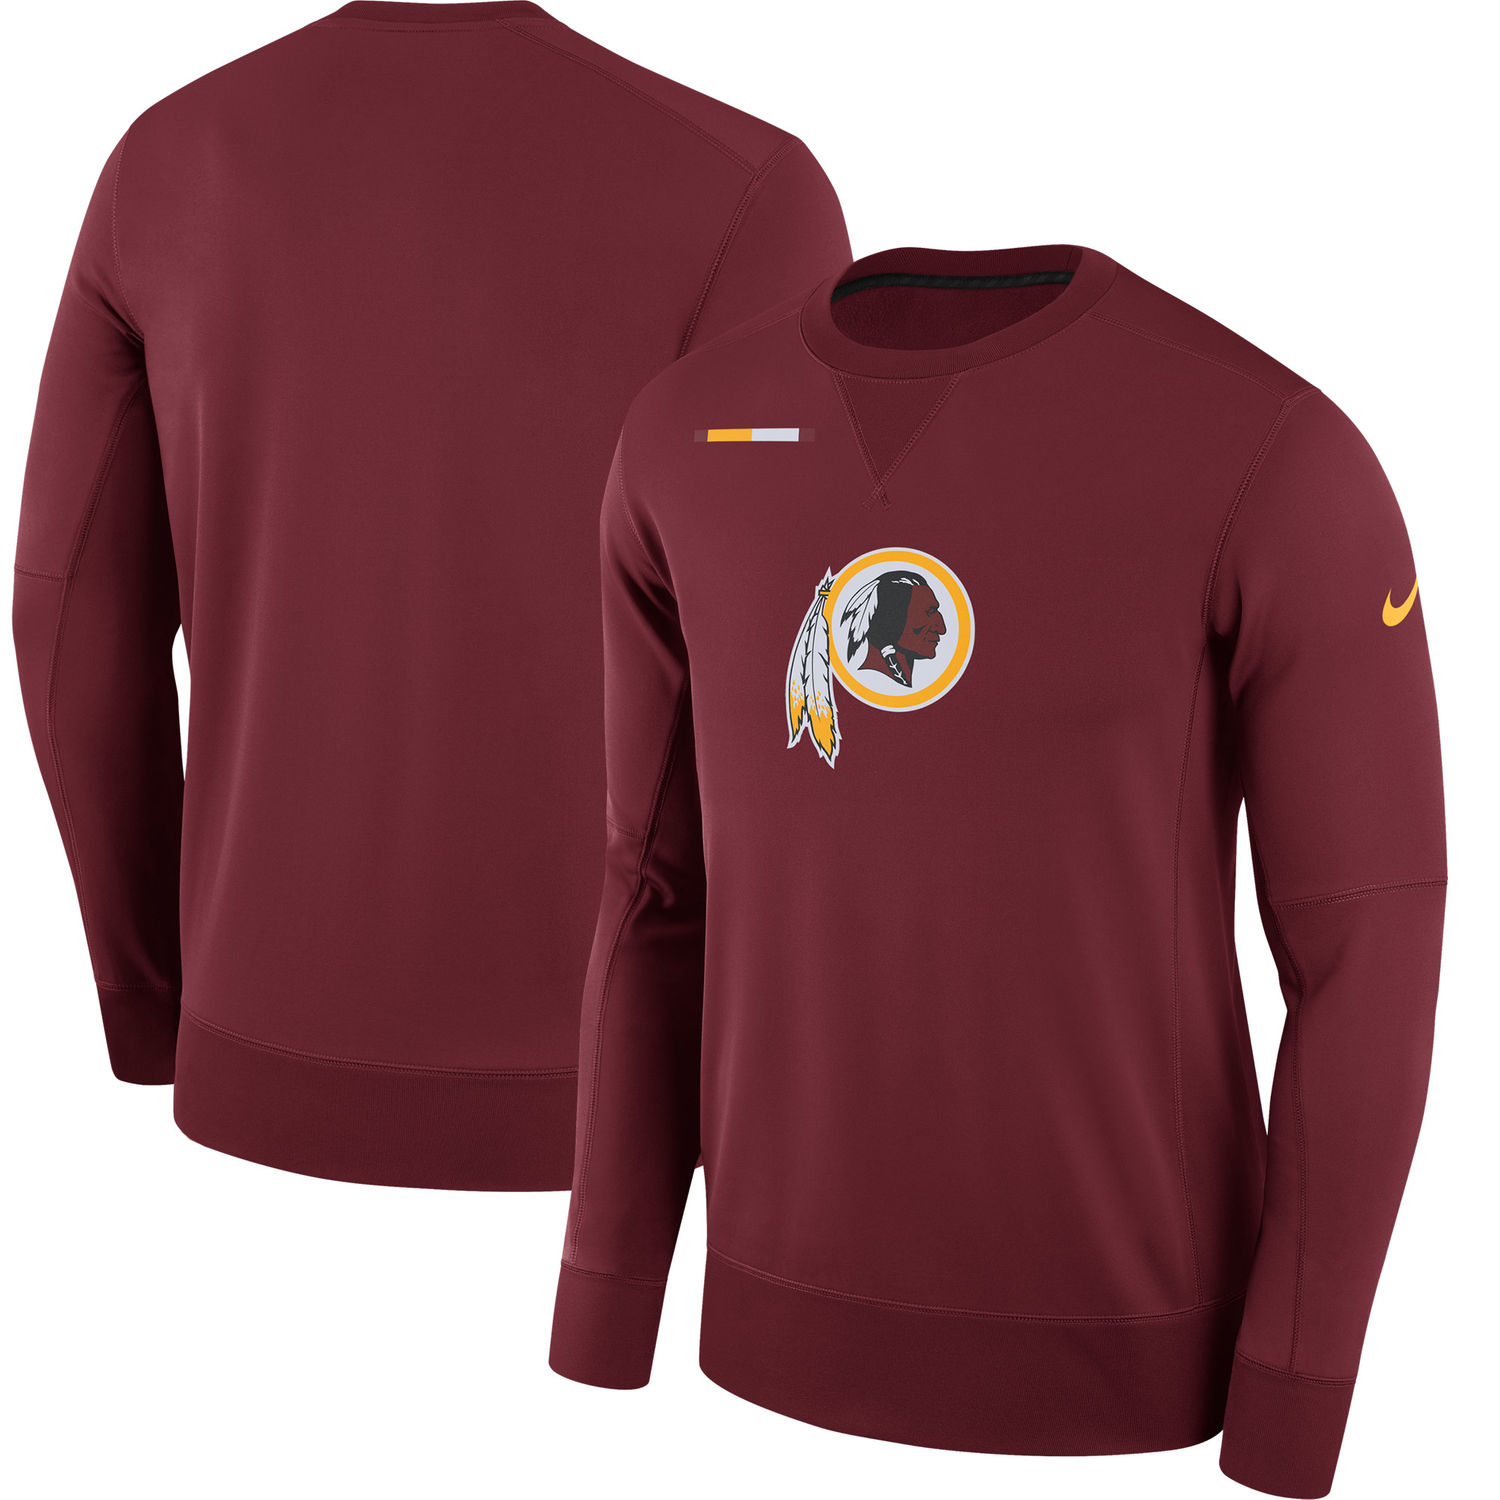 Men's Washington Redskins Nike Burgundy Sideline Team Logo Performance Sweatshirt